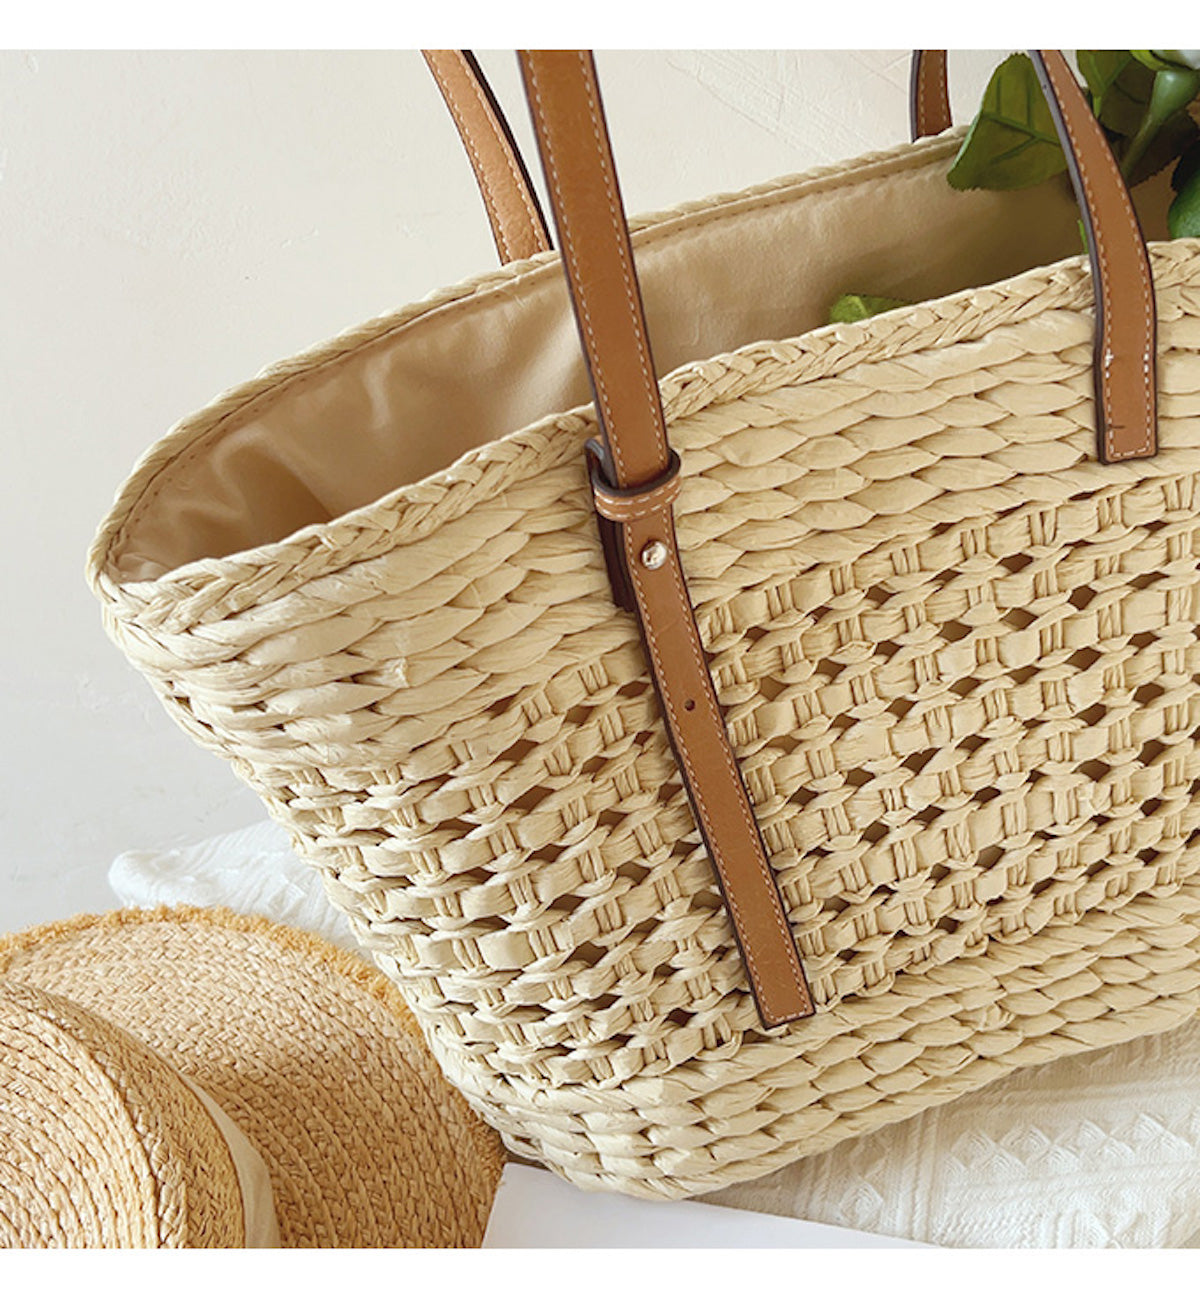 Elena Handbags Large Straw Woven Tote Bag with Leather Straps | Woven tote  bag, Woven beach bags, Straw tote bag